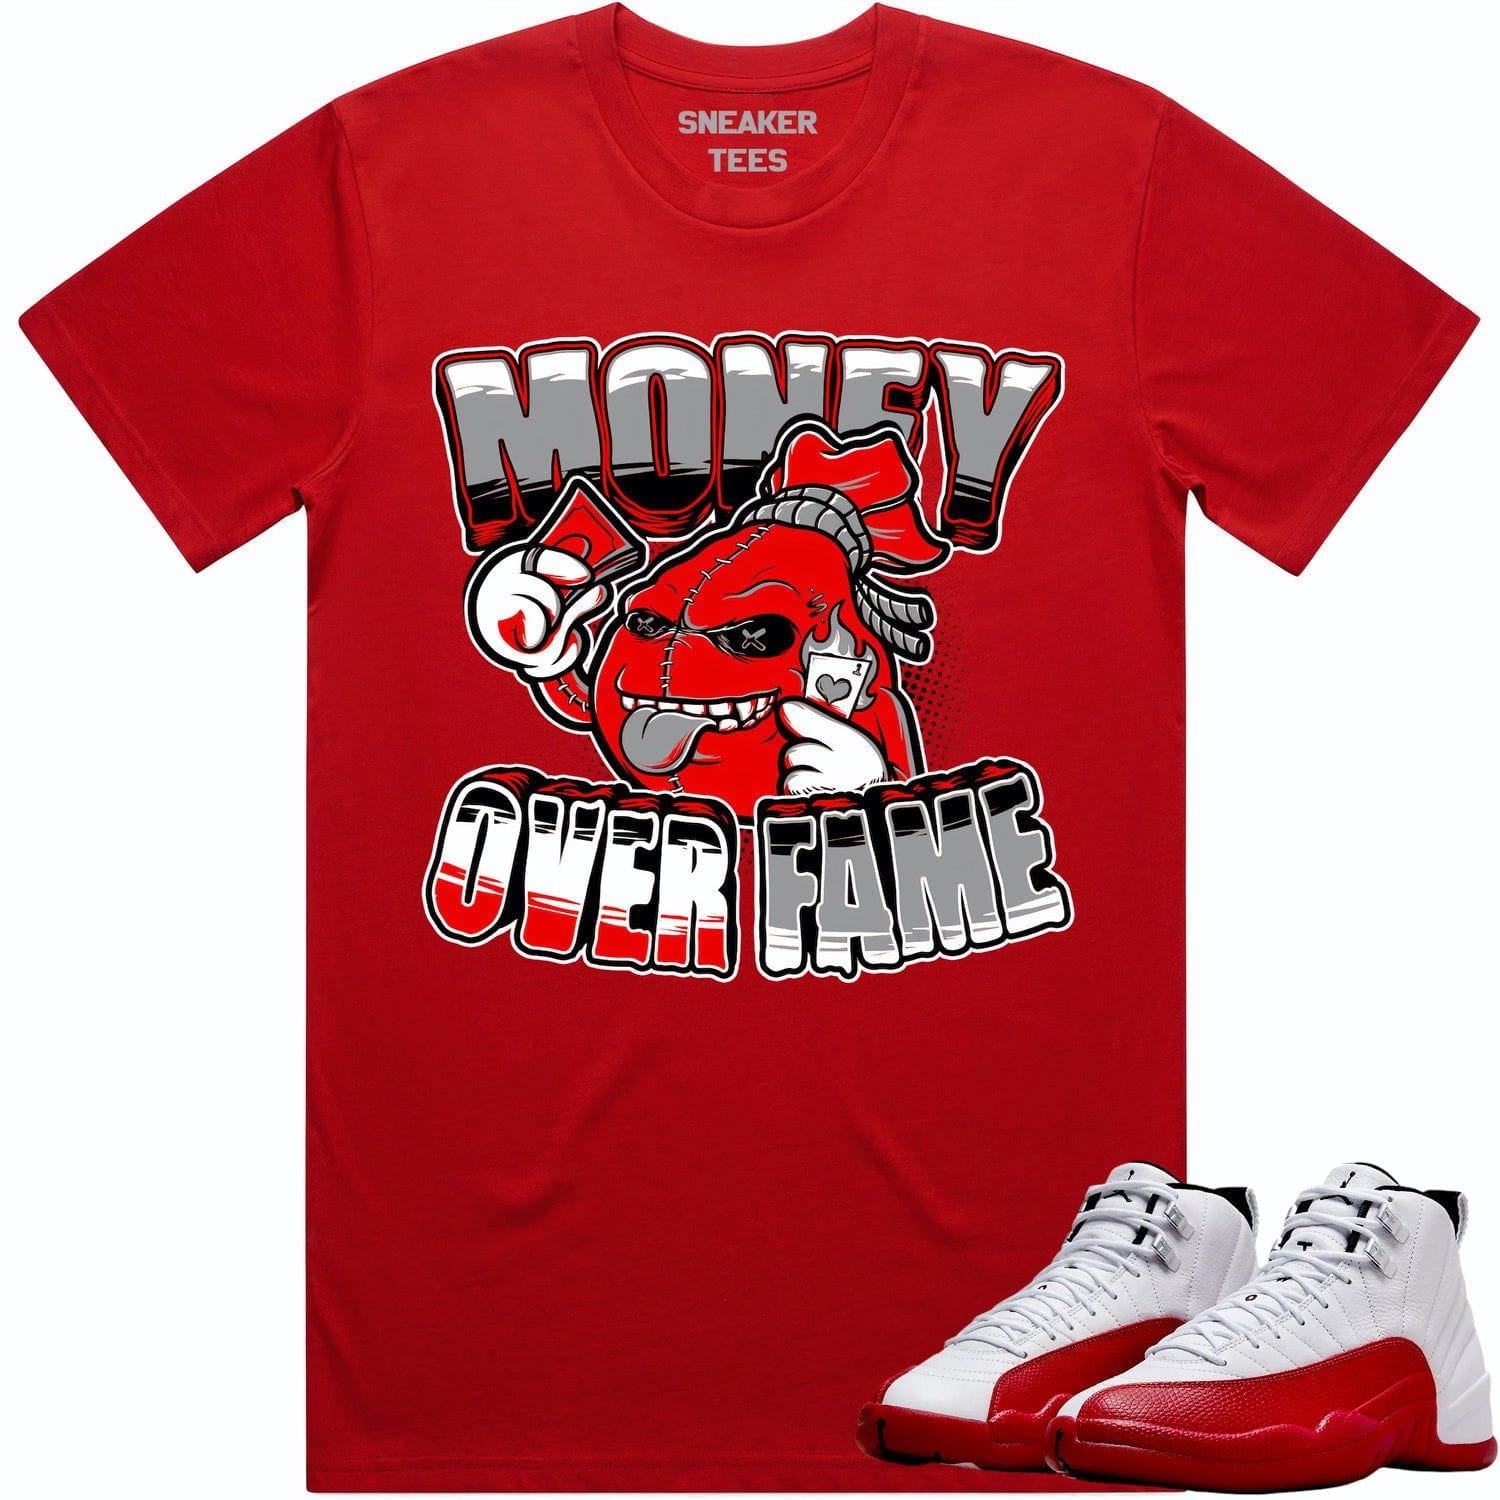 Cherry 12s Shirt - Jordan Retro 12 Cherry Shirts - Red Money over Fame